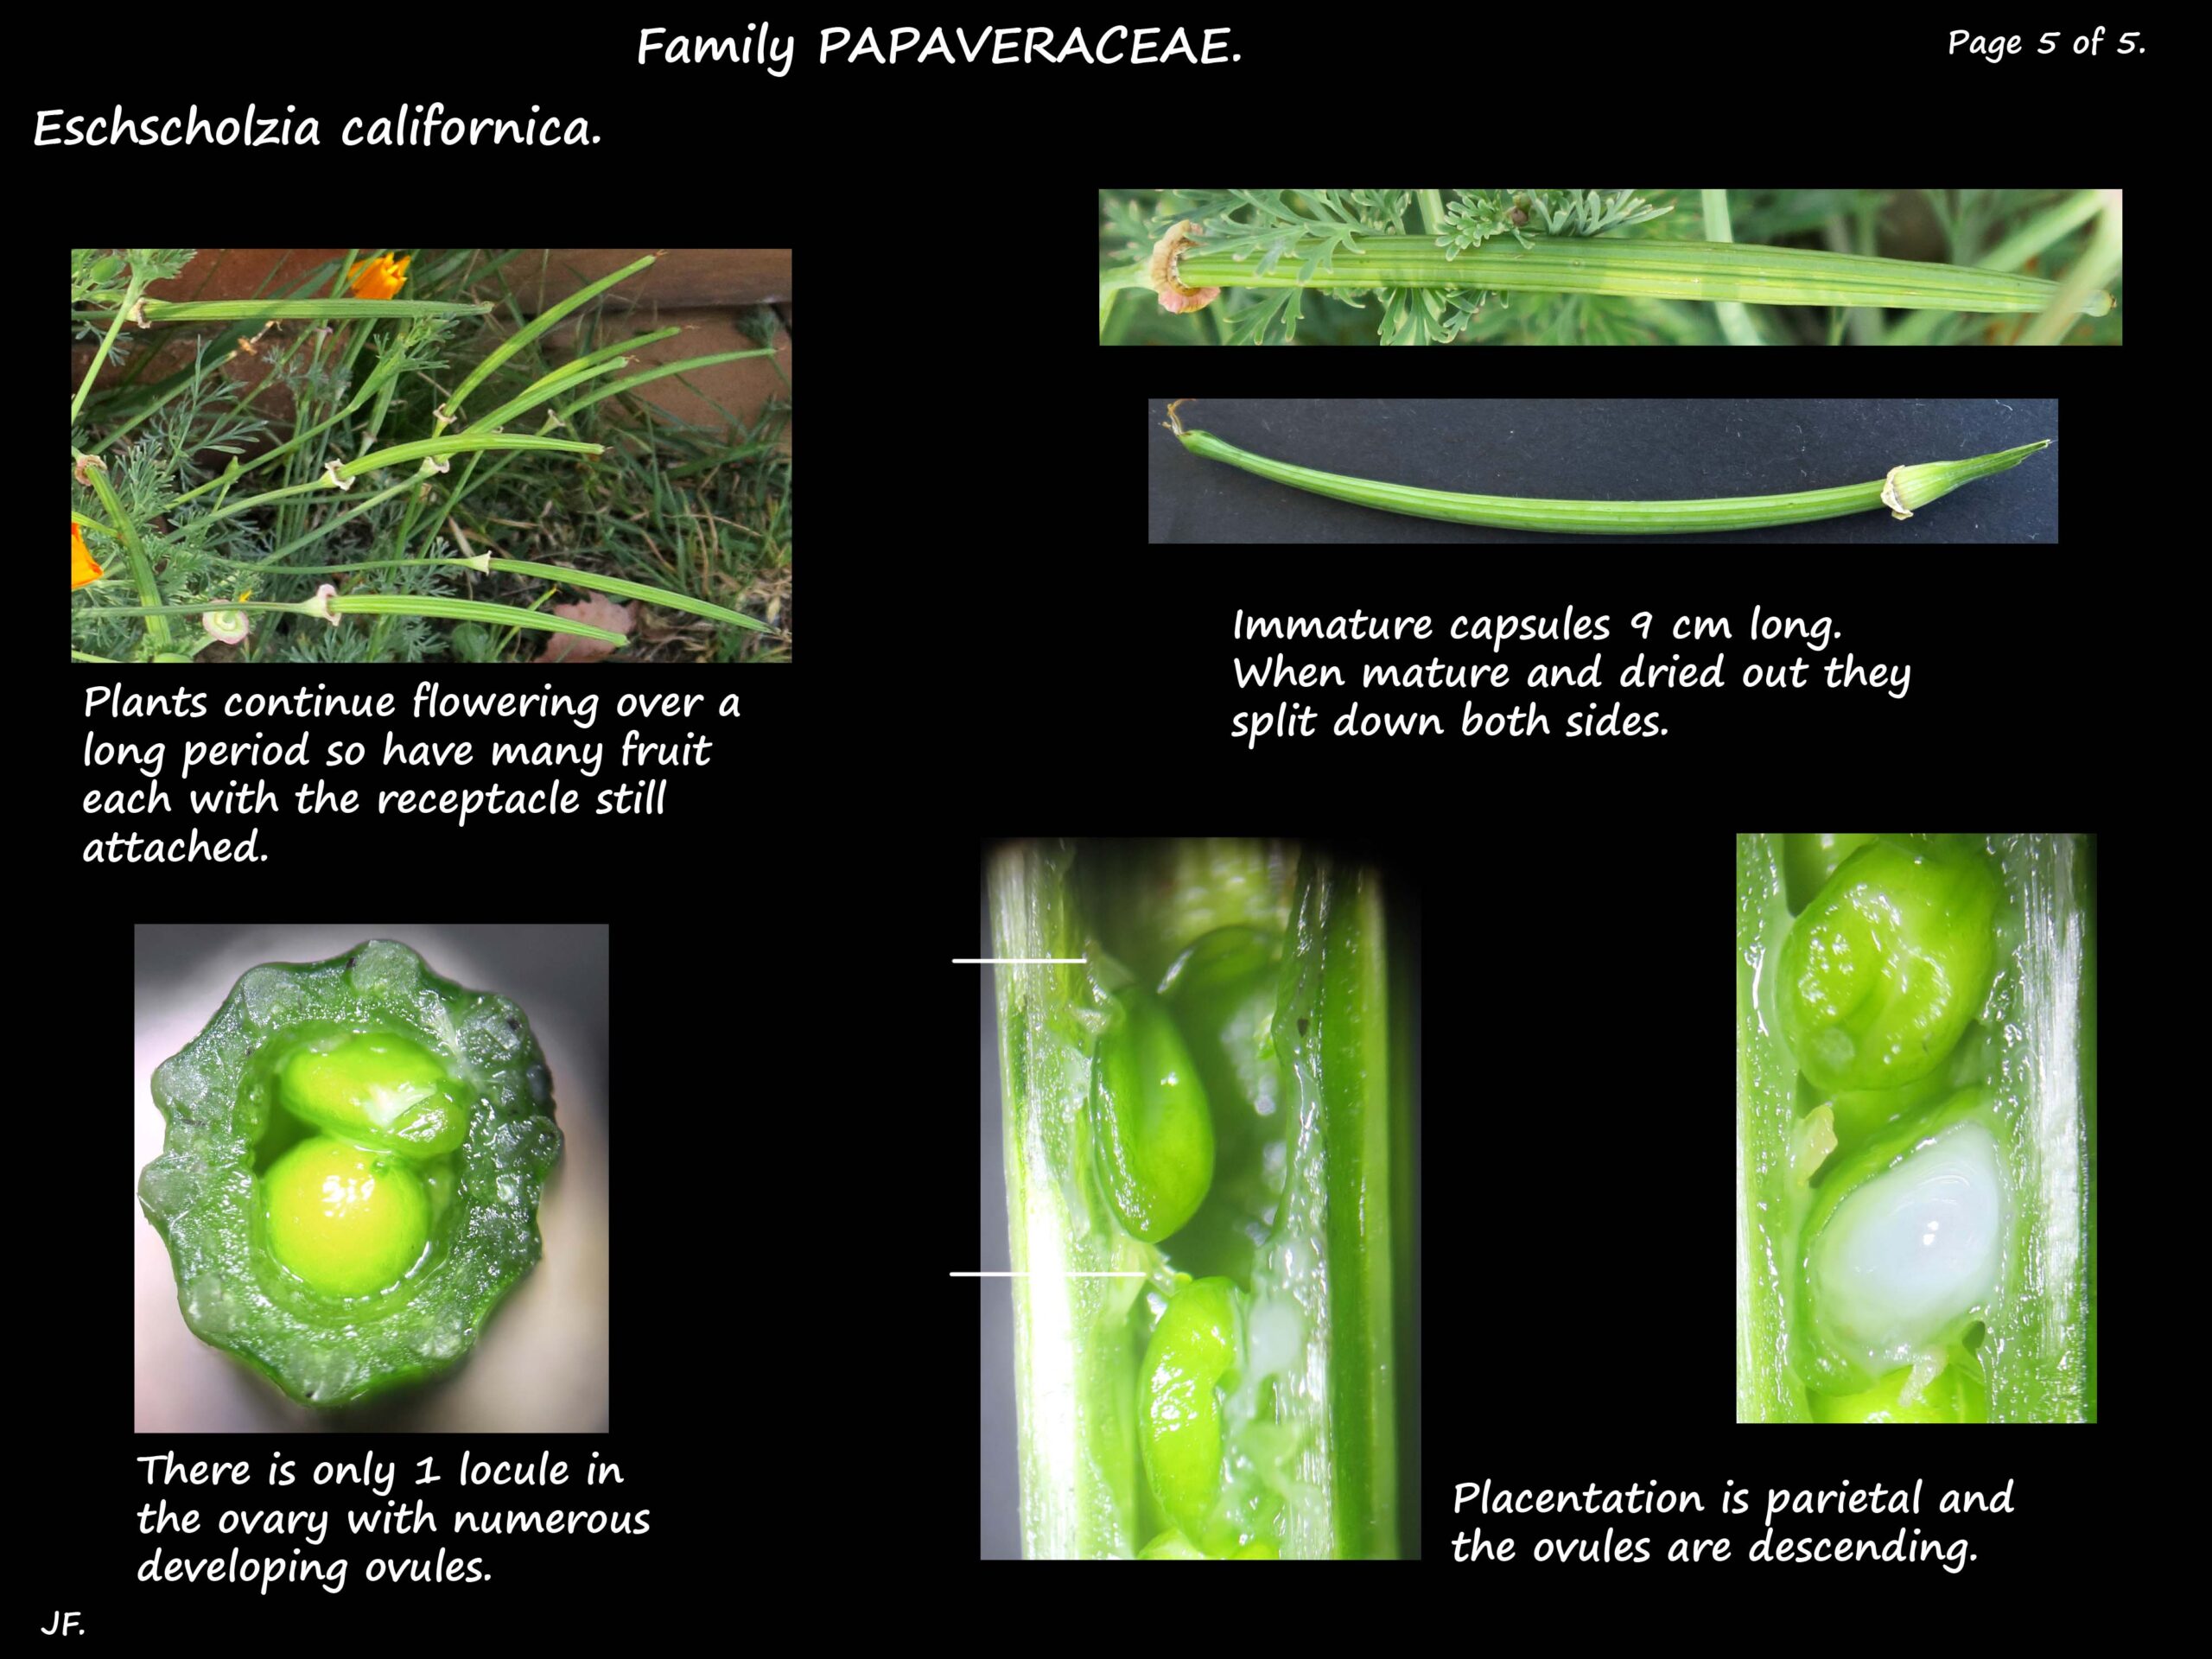 5 Eschscholzia californica capsules